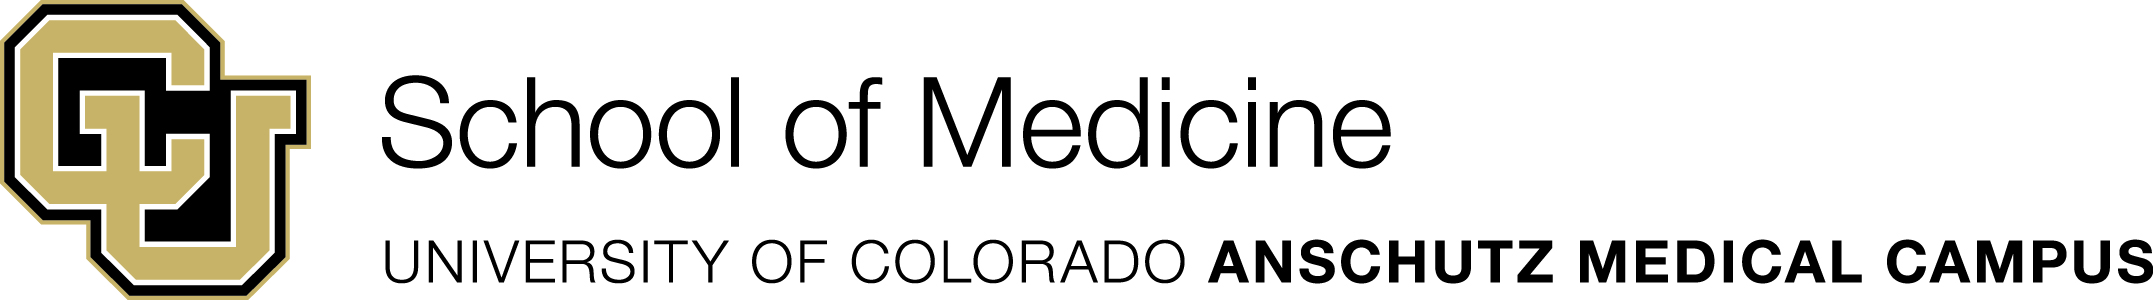 school of medicine logo